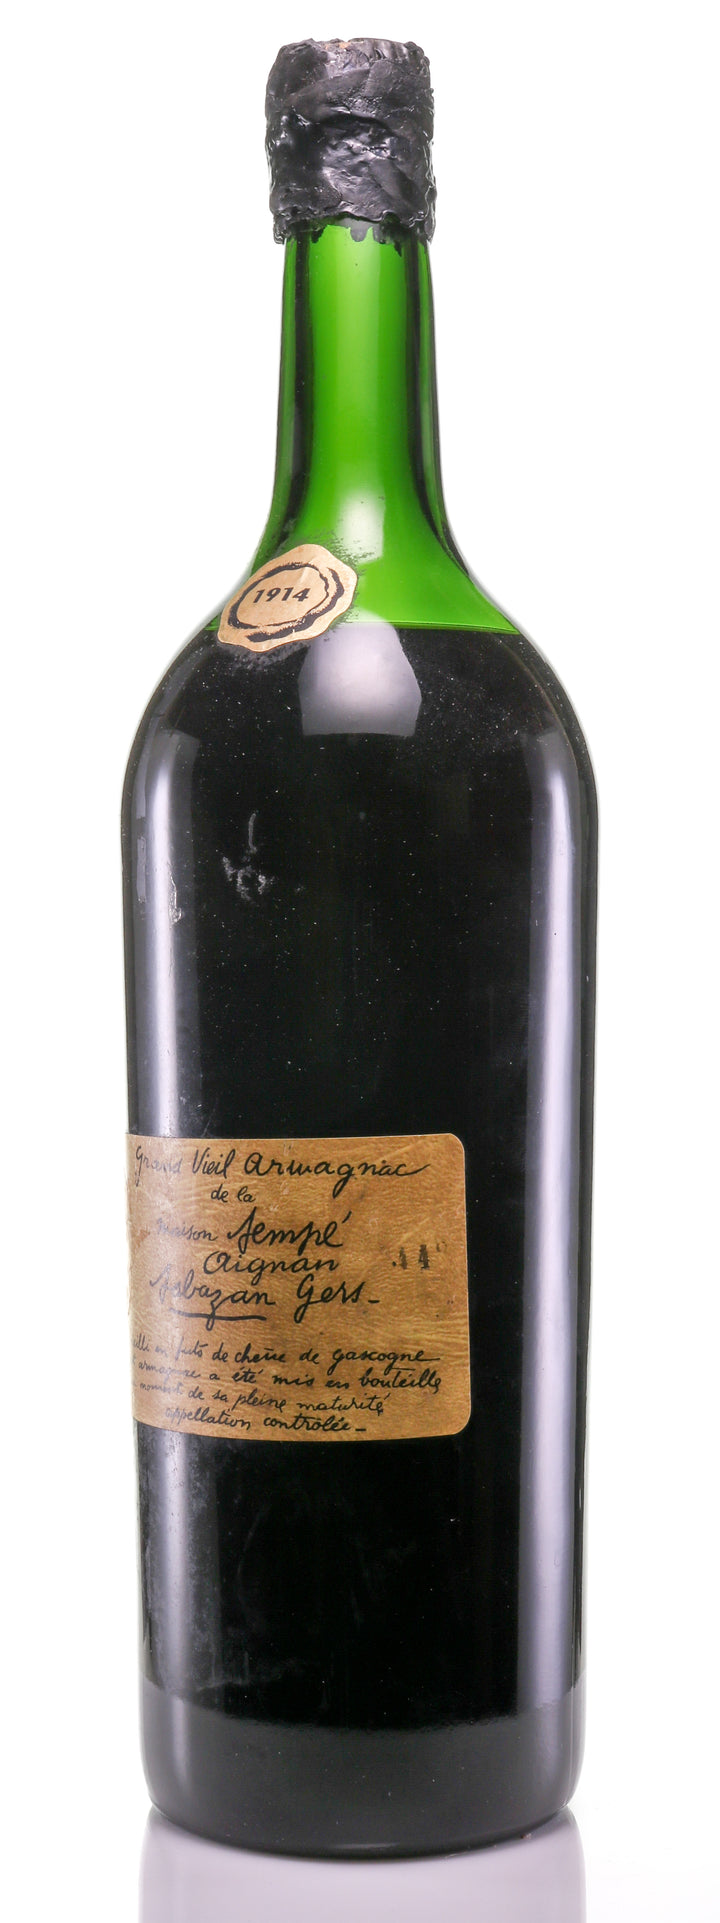 1914 Sempe Vintage Armagnac 1.5L - legendaryvintages